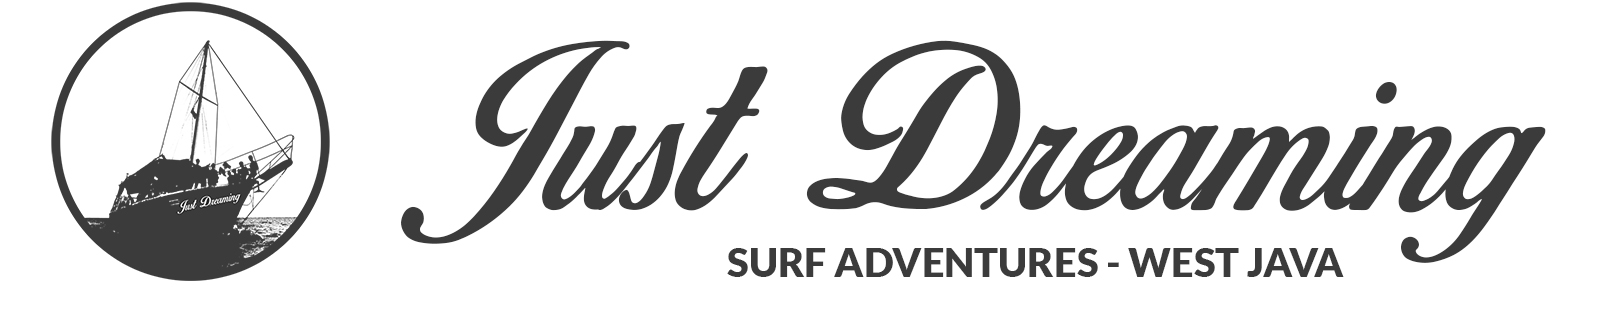 Just Dreaming Surf Charters - Panaitan Island, West Java